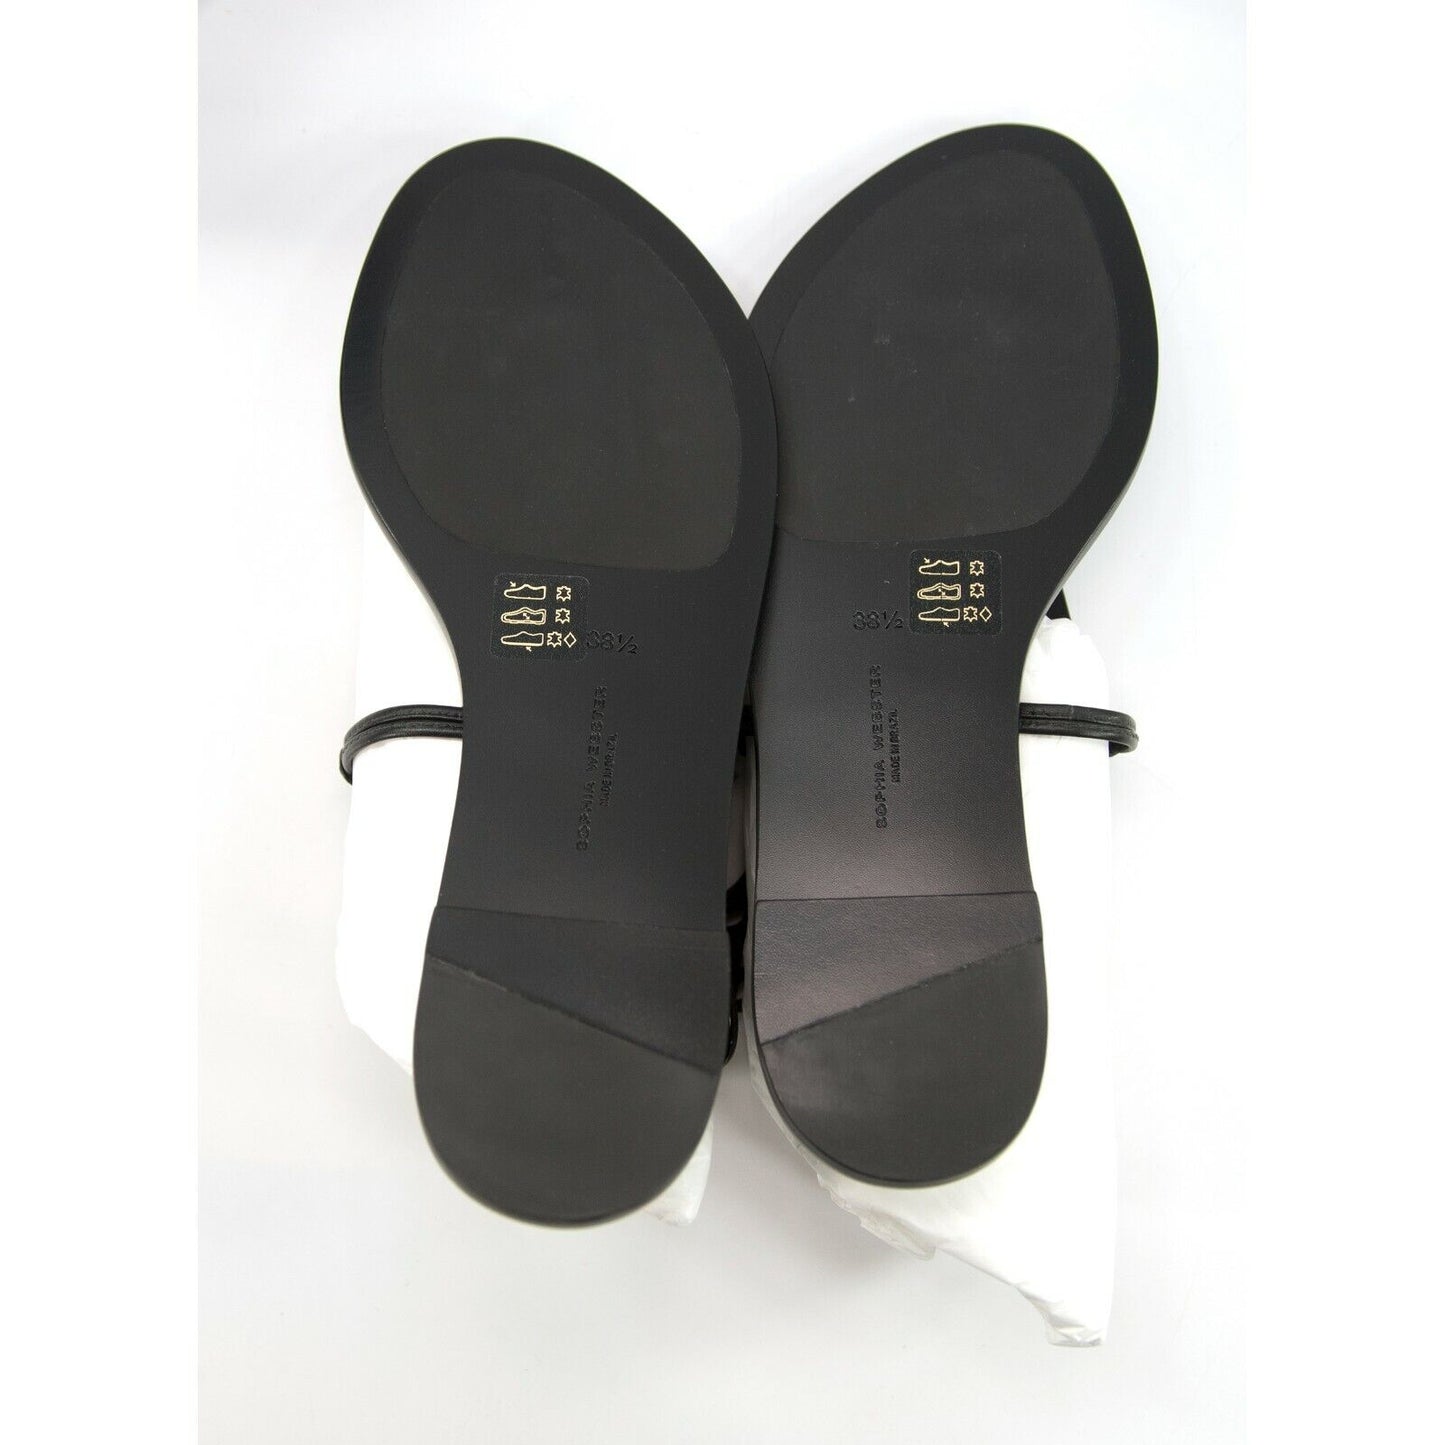 Sophia Webster Talulah Butterfly Black Leather Flat Sandals Size 38.5 NIB